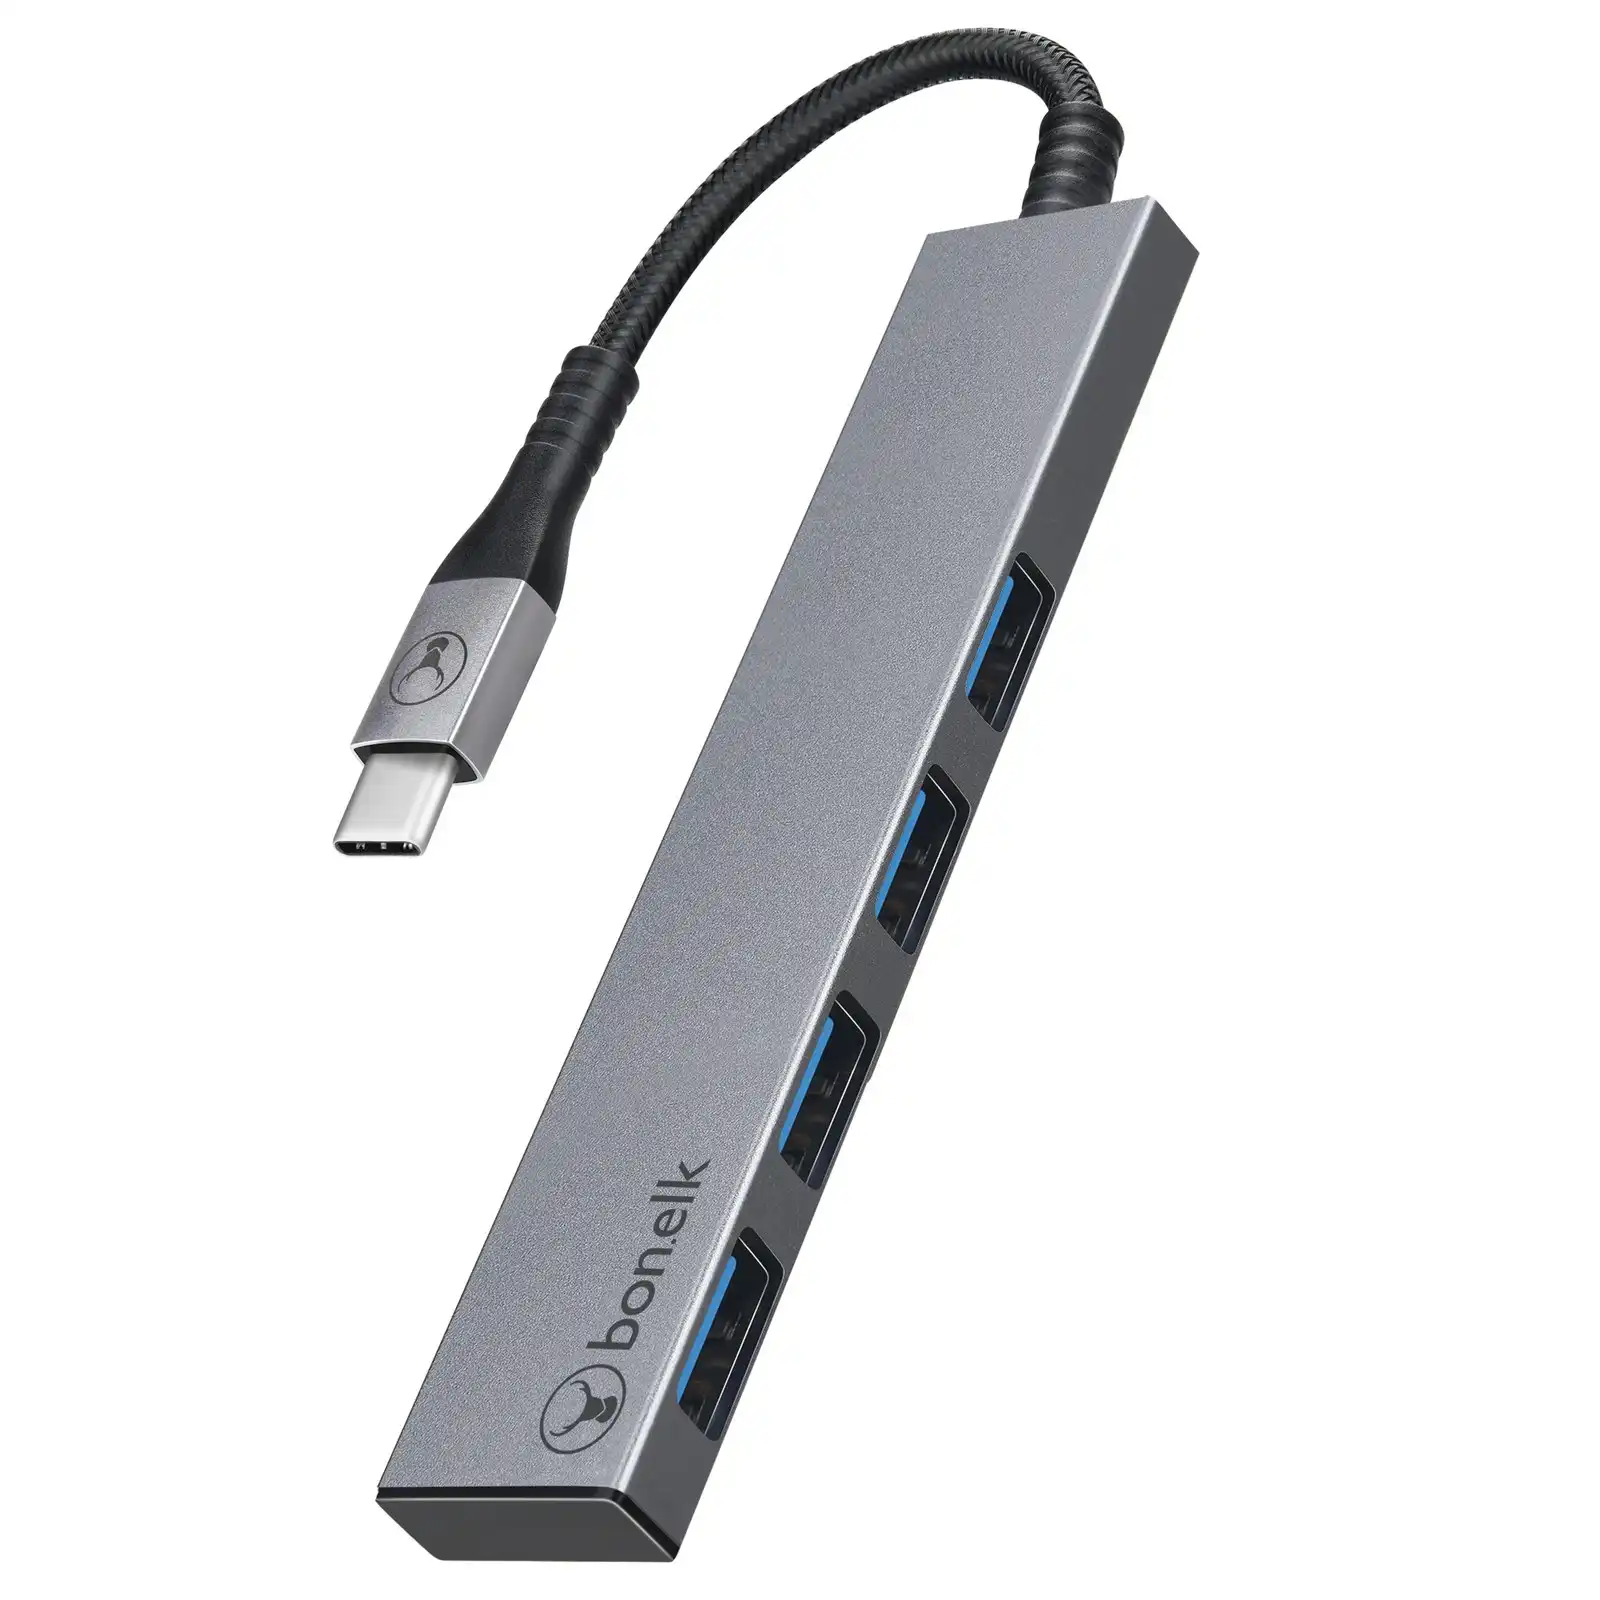 Bonelk Long-Life USB-C to 4 Port USB 3.0 Slim Hub/Adapter for Laptop Space Grey